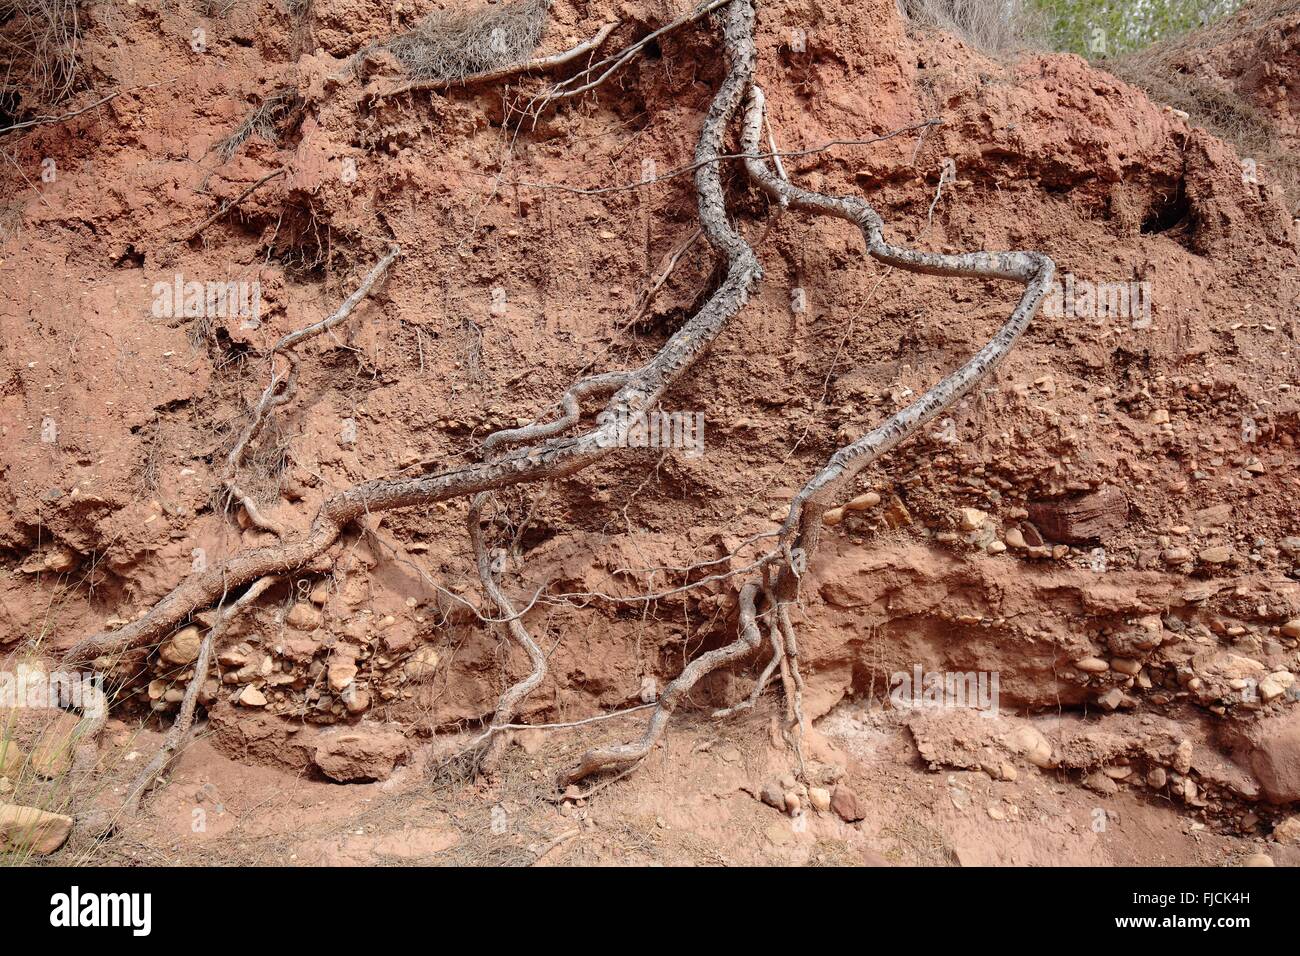 Wurzeln eines Baumes im Lehm Boden Aspe, Alicante, Spanien Stockfoto